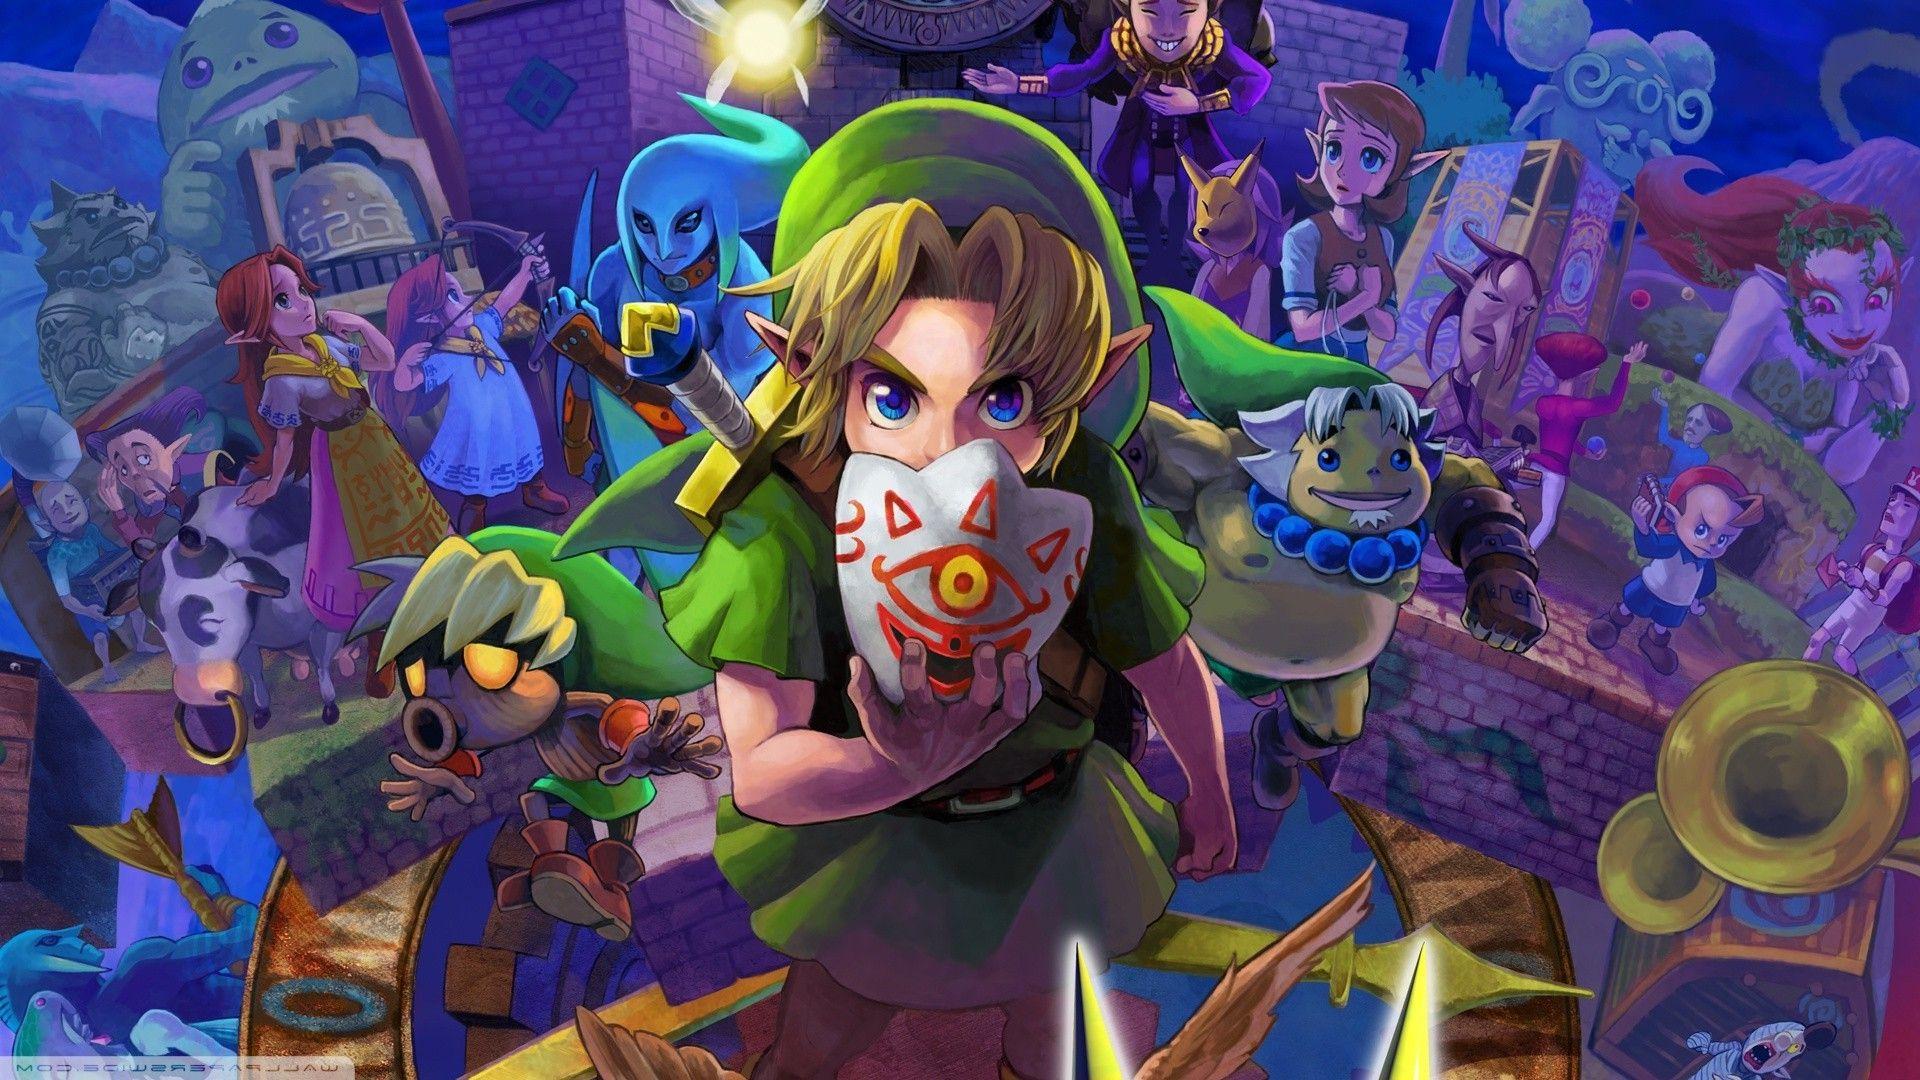 The Legend Of Zelda: Majora's Mask HD Wallpaper and Background